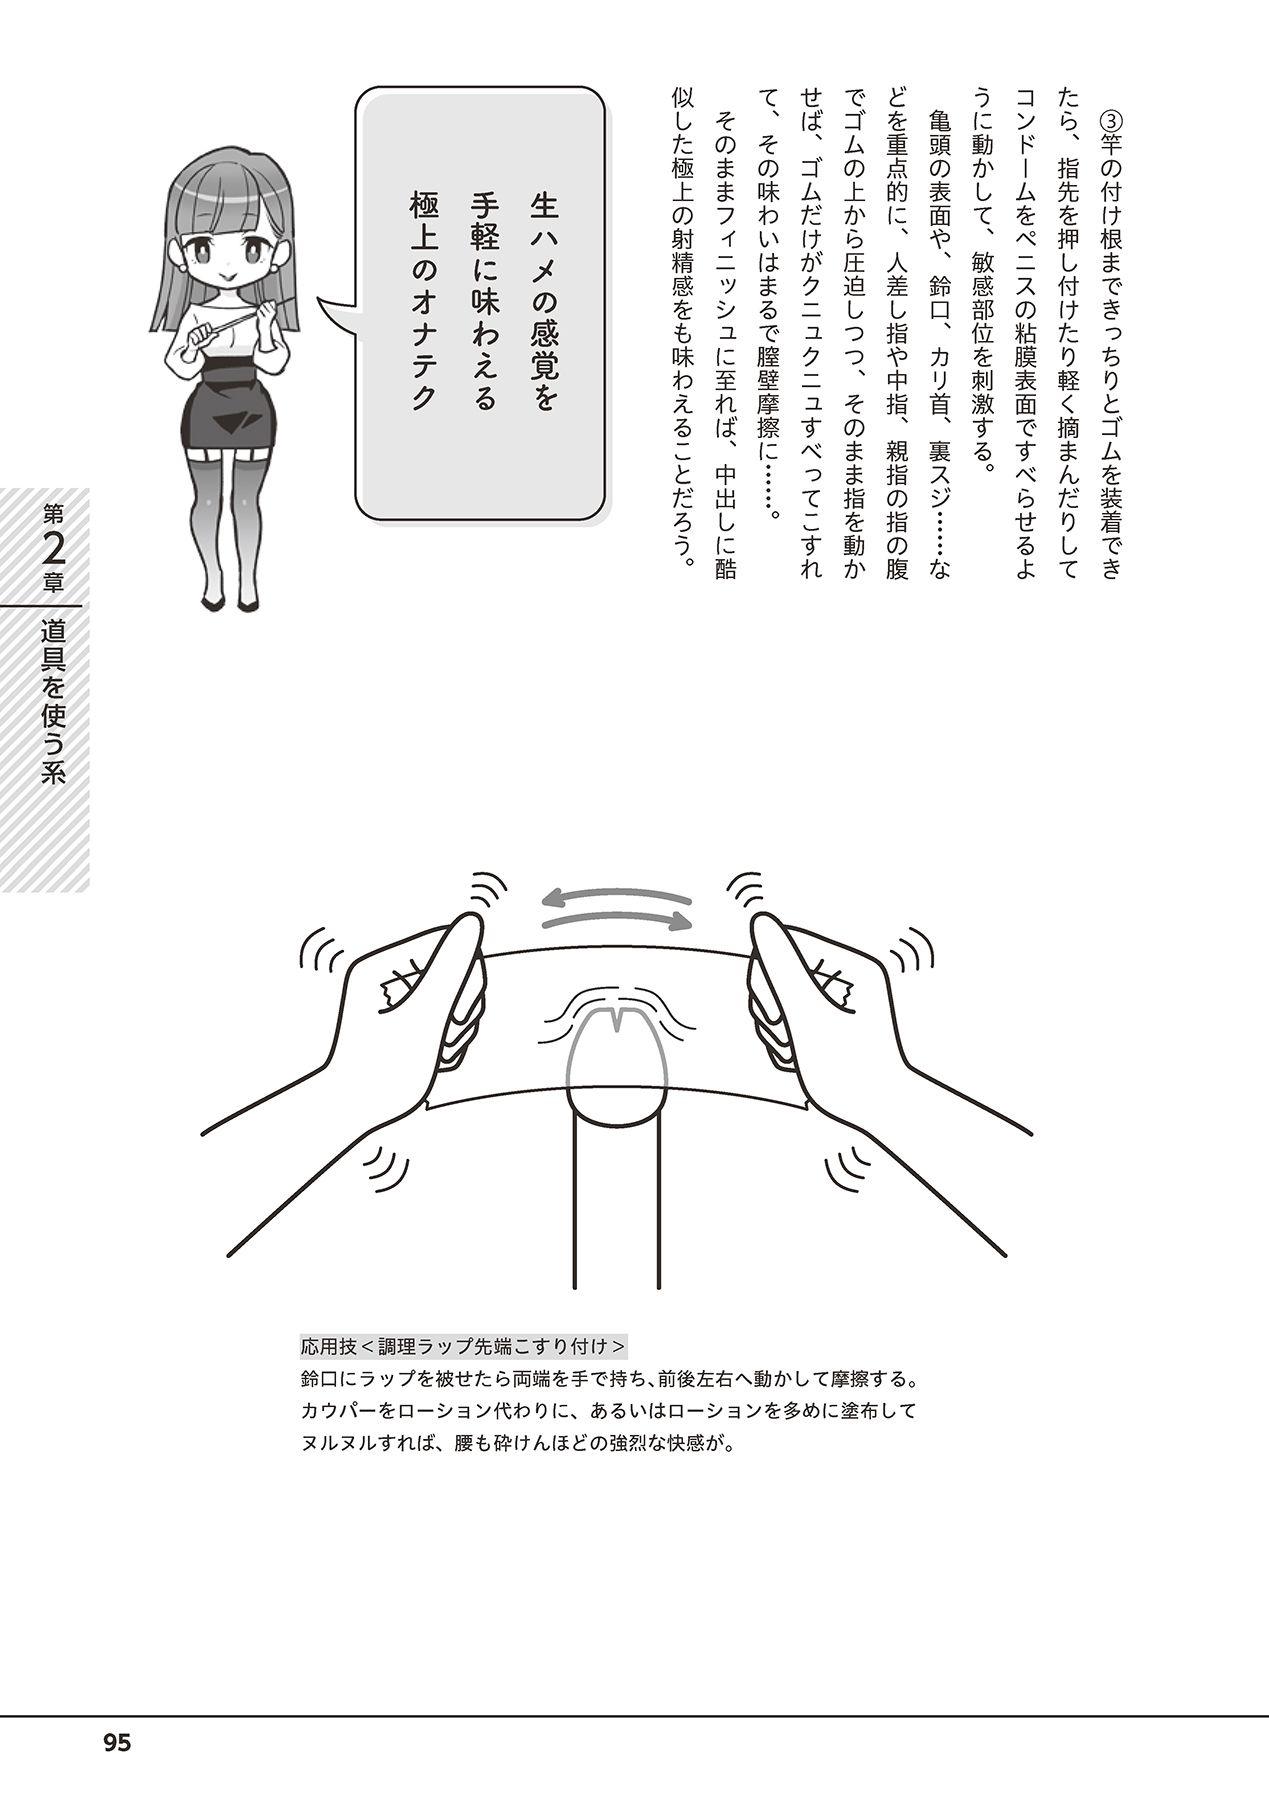 Otoko no Jii Onanie Kanzen Manual Illustration Han...... Onanie Play 96